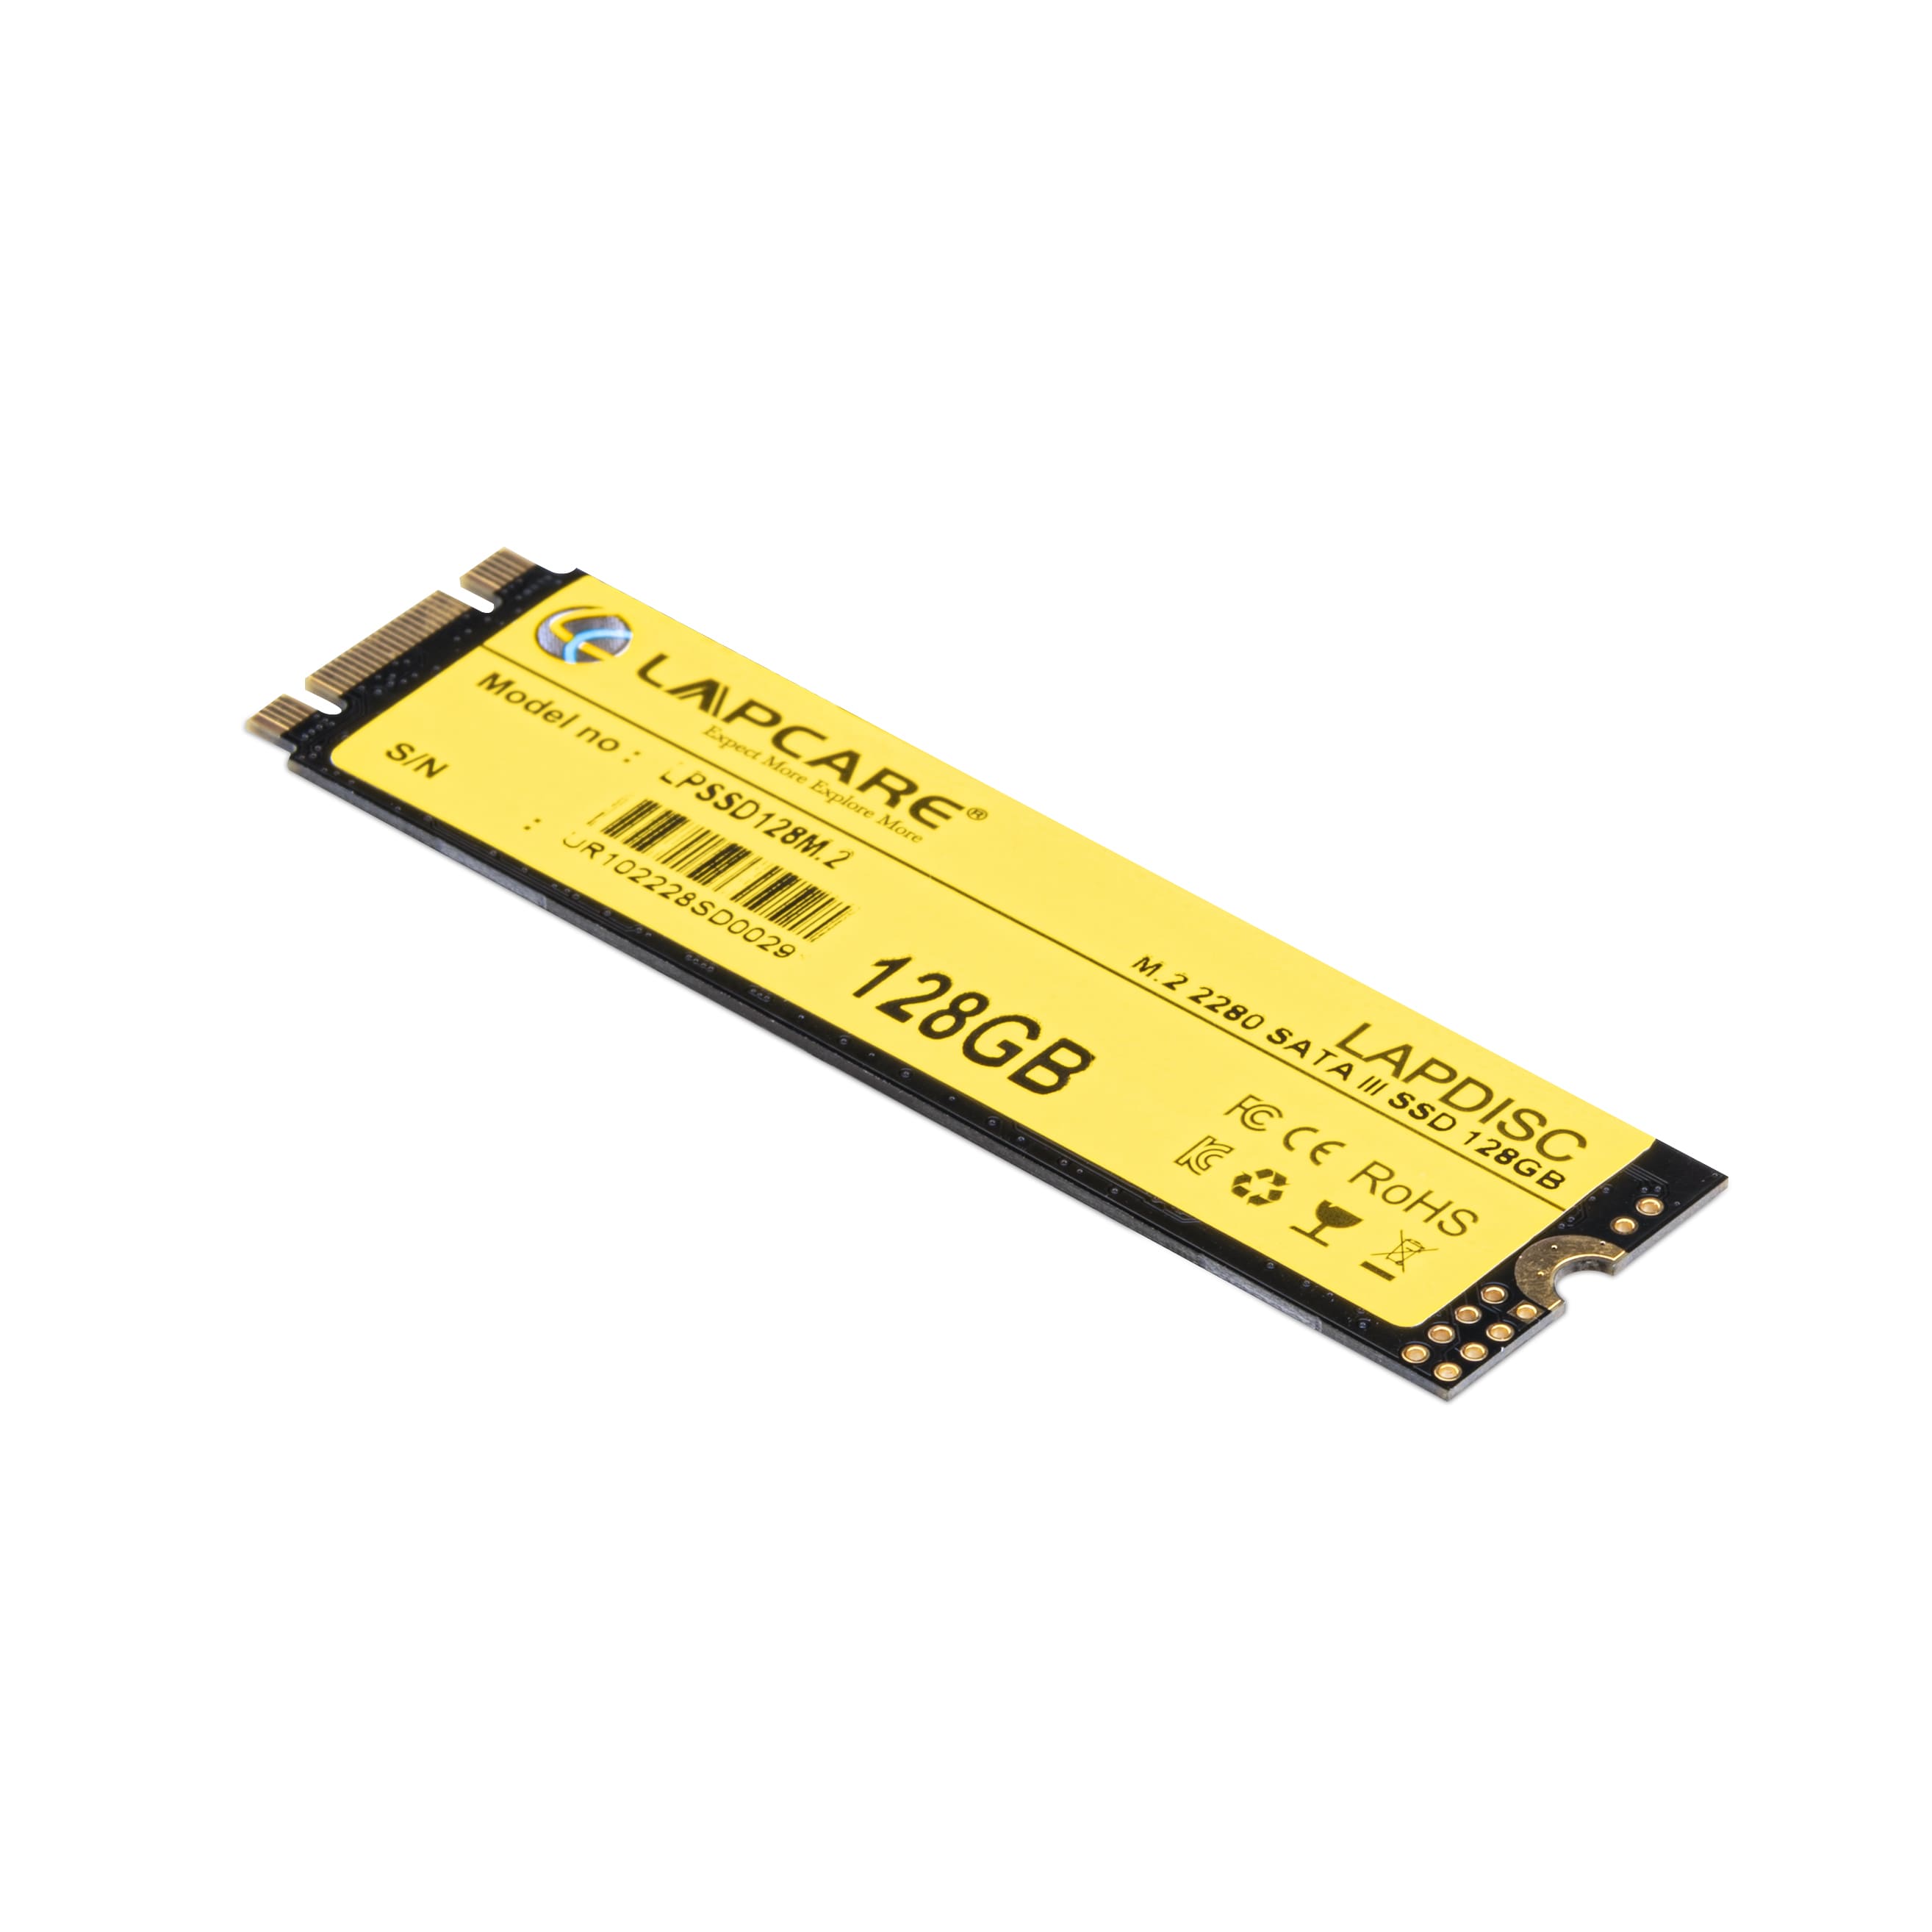 Lapcare LAPDISC M.2 2280 SATA III SSD 128GB